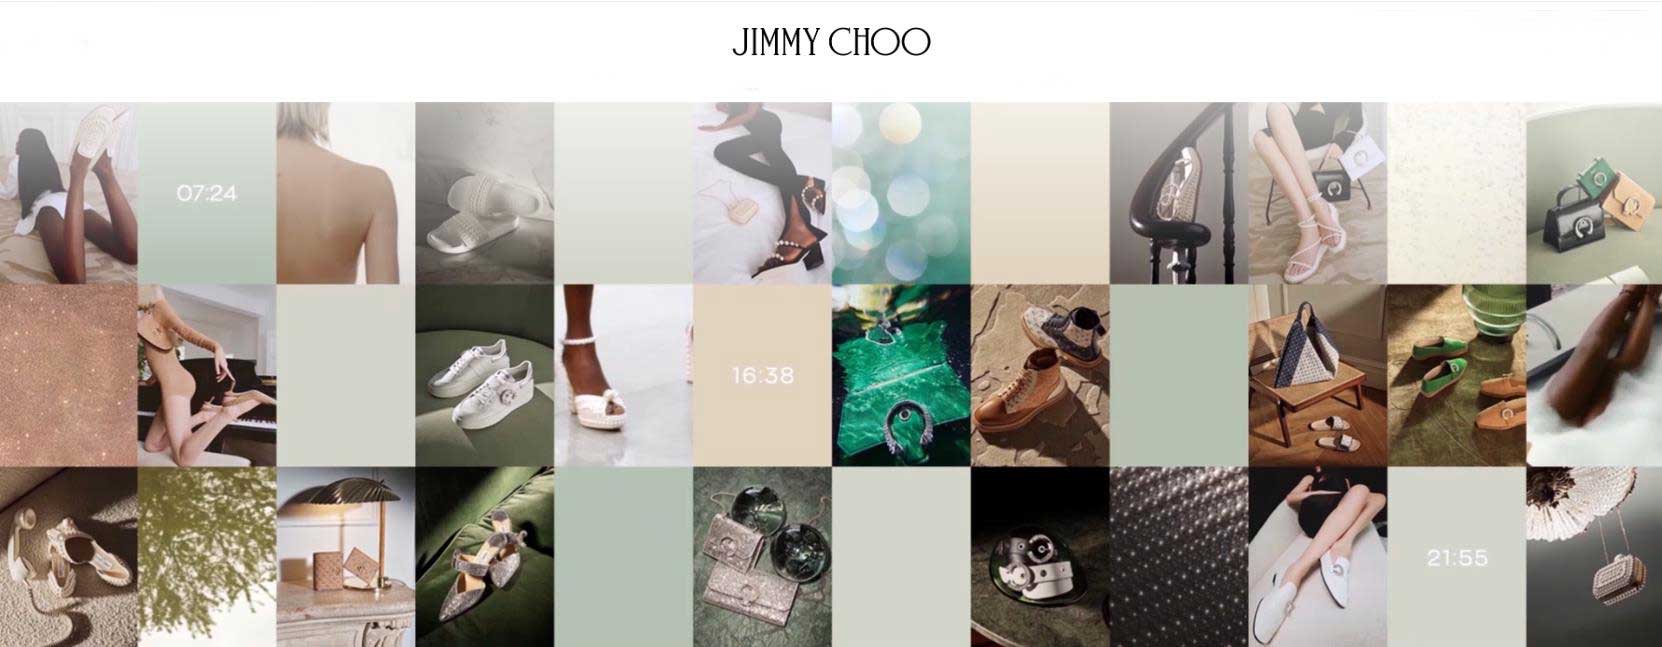 Jimmy Choo 高仿周仰杰复刻鞋品牌专区